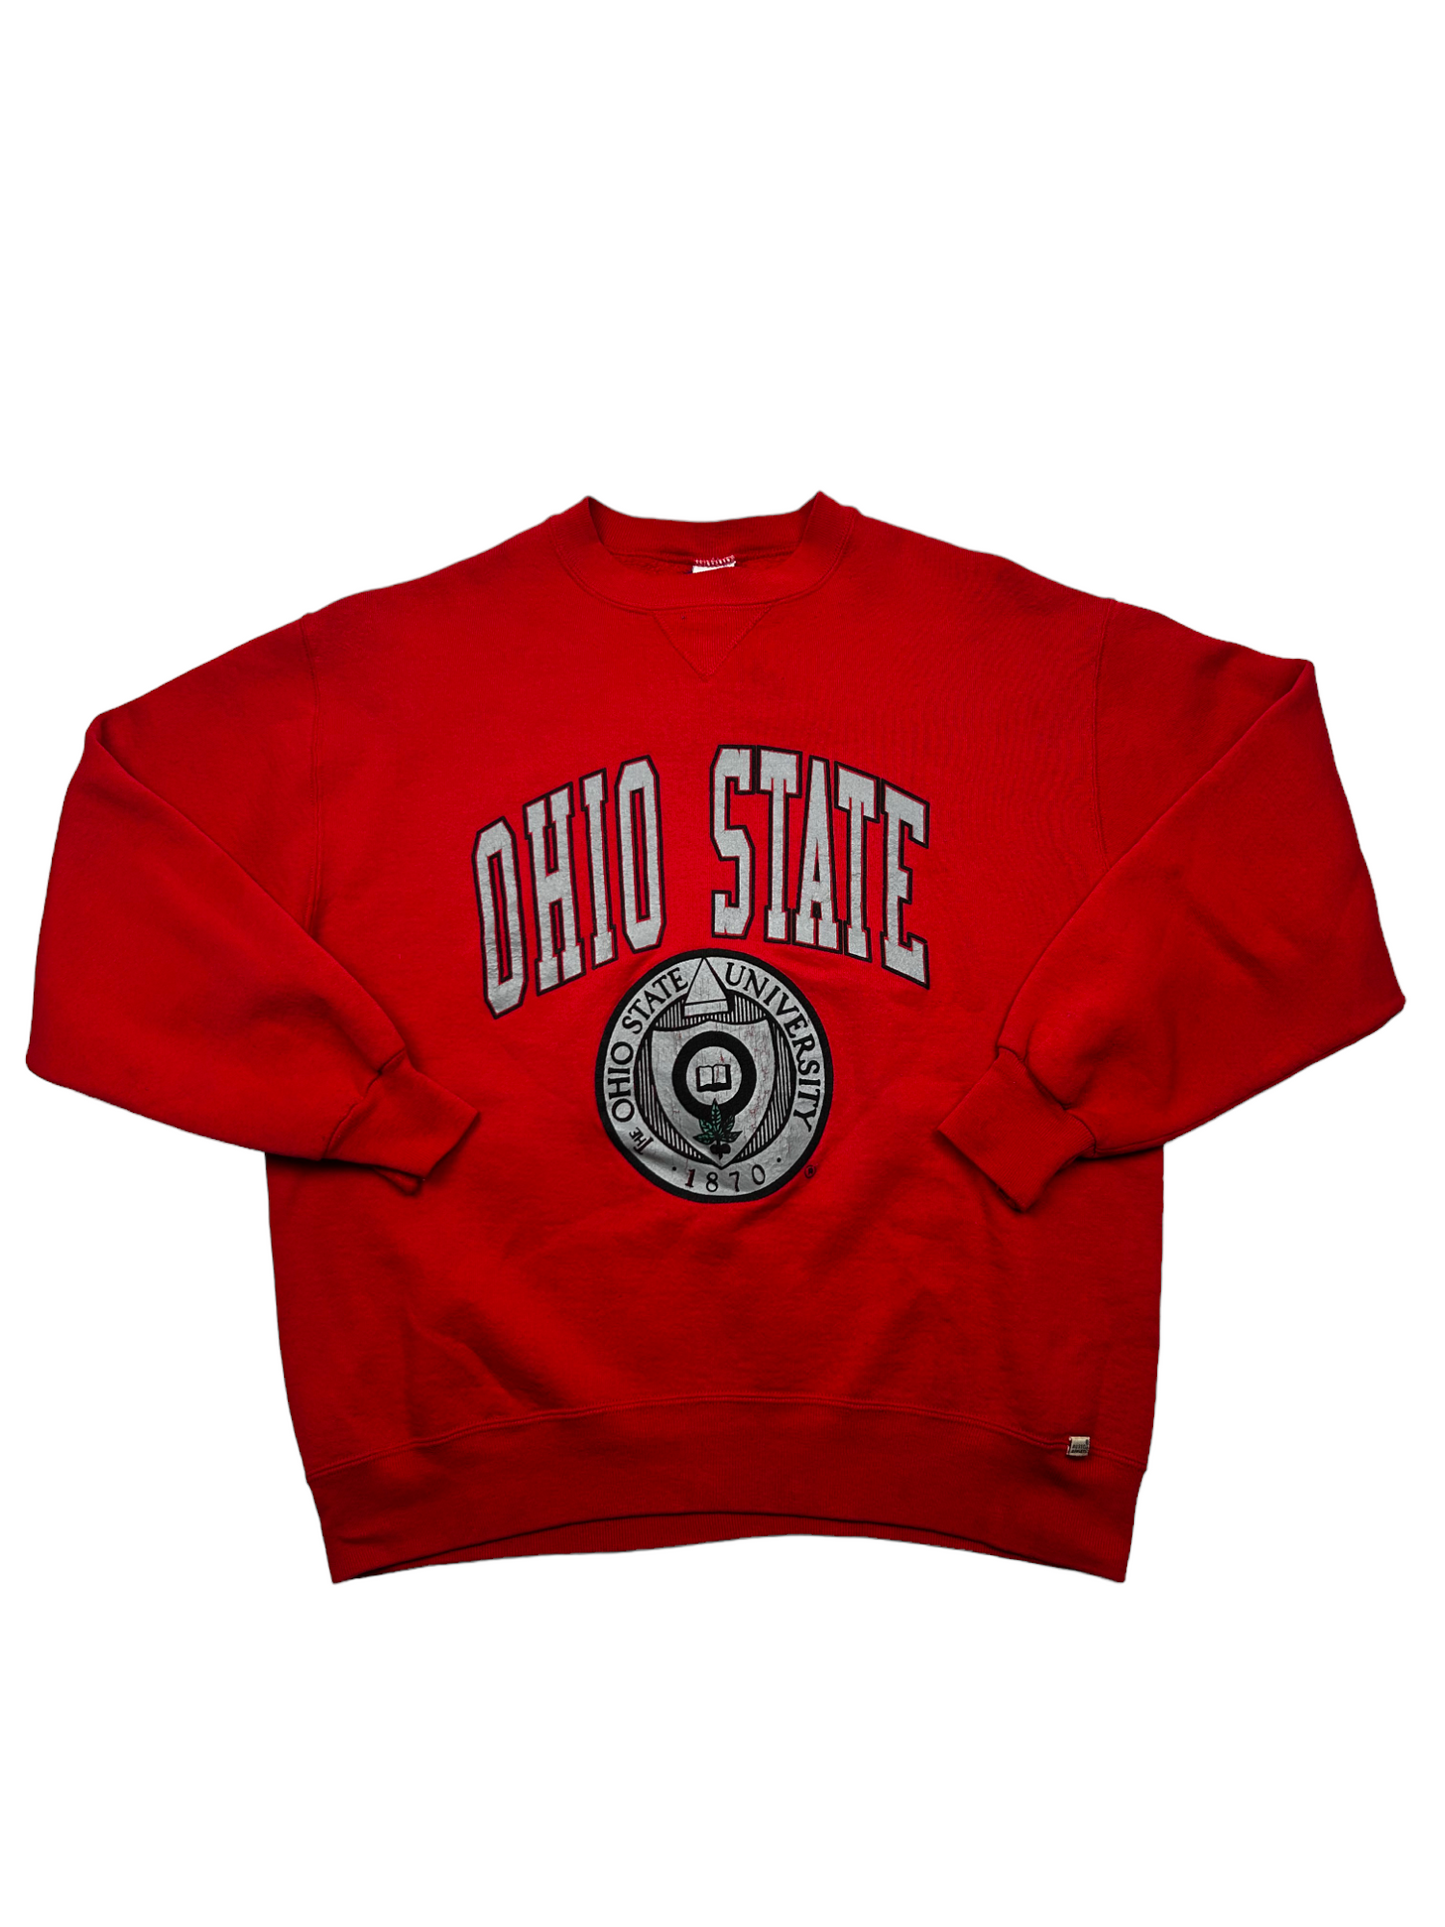 Ohio State University Red Crewneck